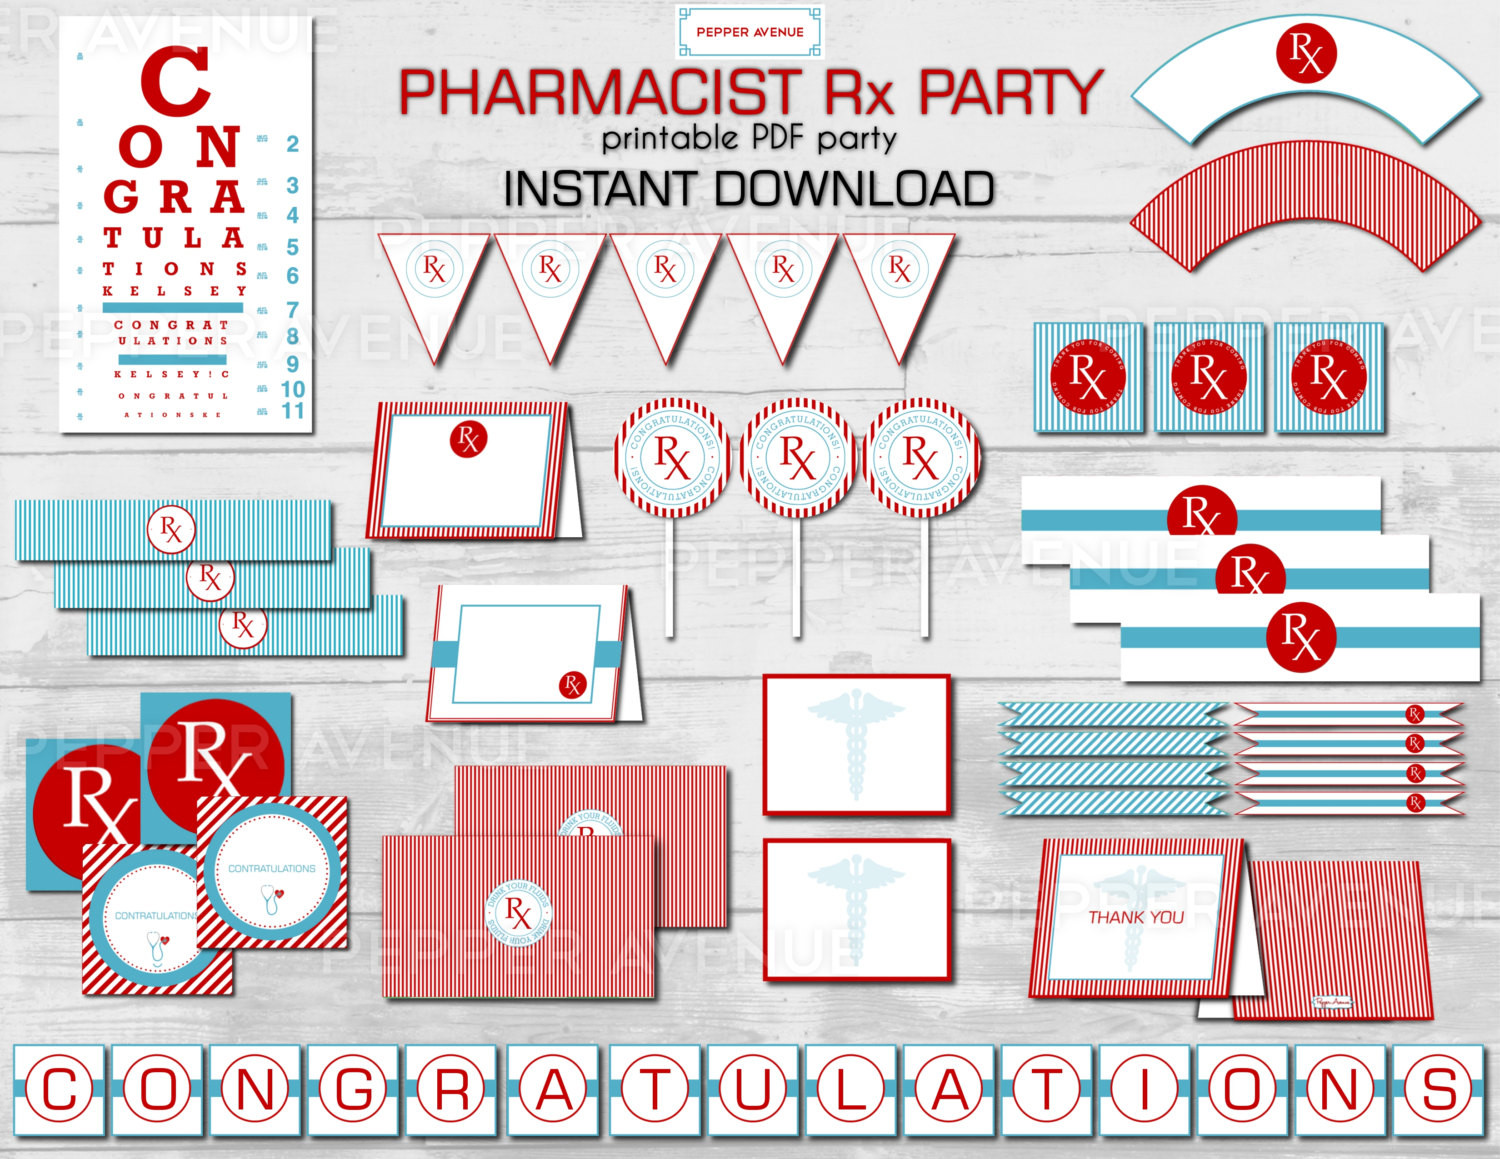 Pharmacy School Graduation Party Ideas
 Rx Pharmacist Party or Pharmacy School Graduation Party